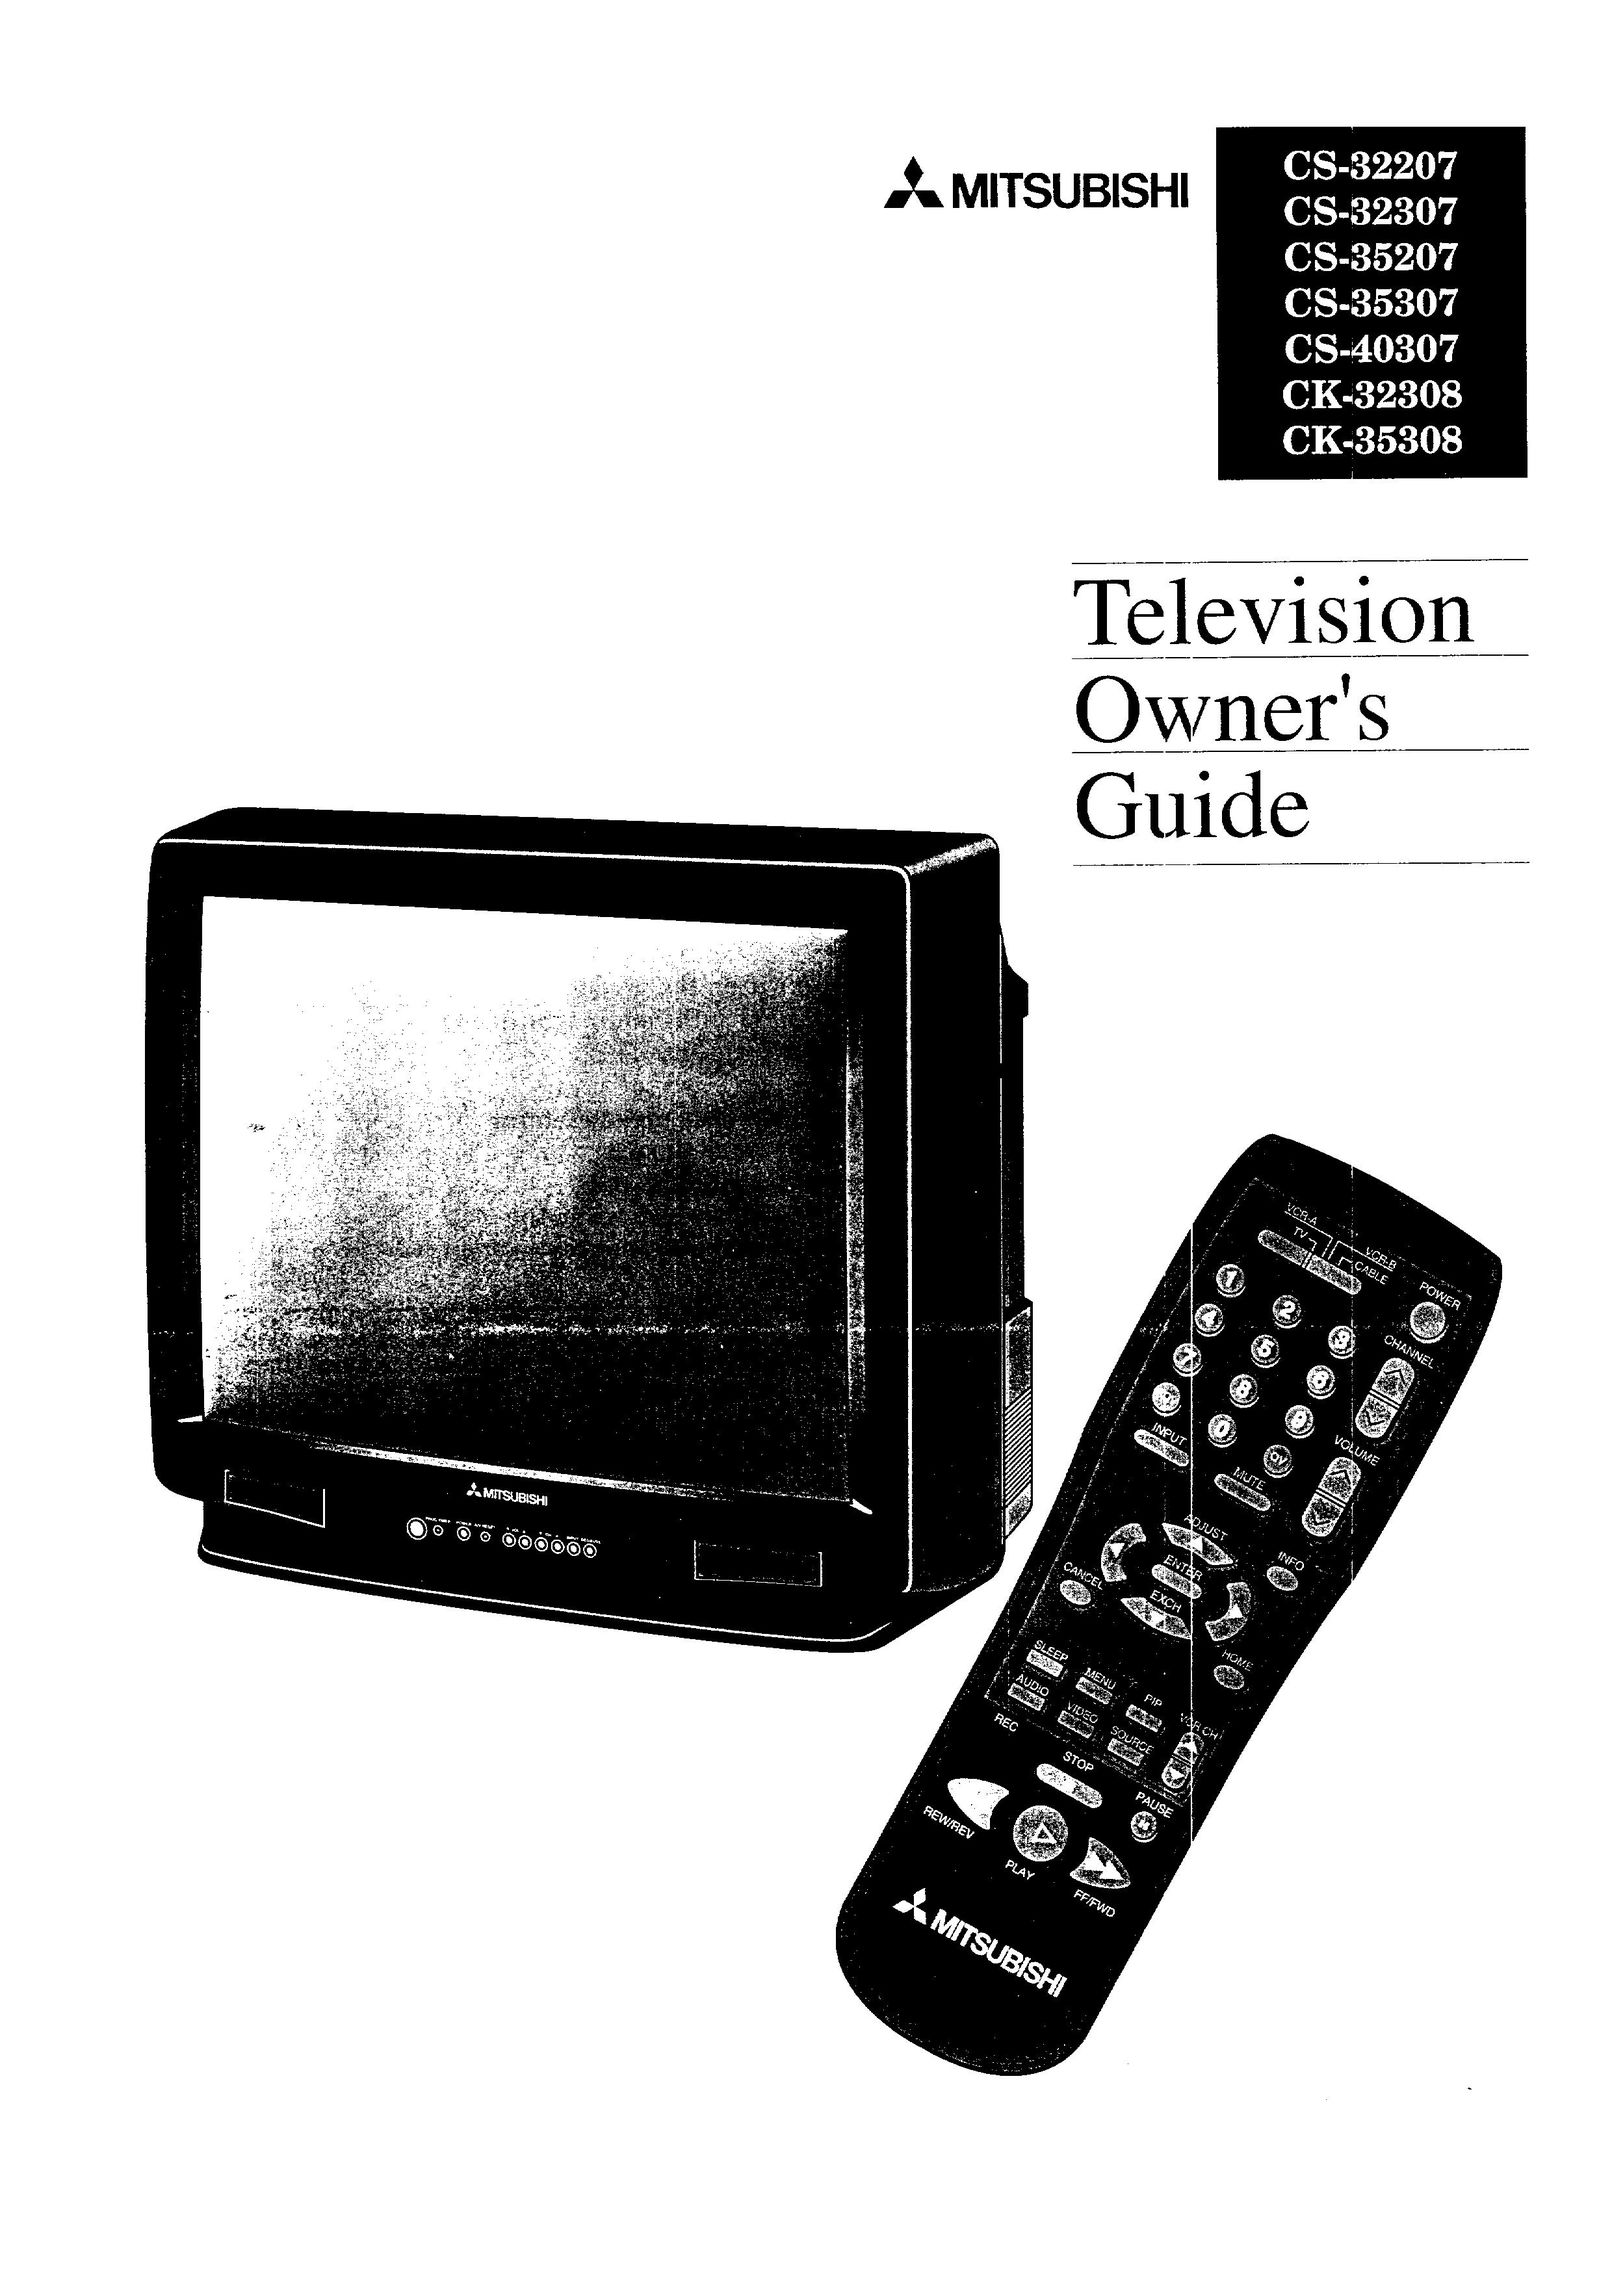 Mitsubishi Electronics CS-35207 CRT Television User Manual